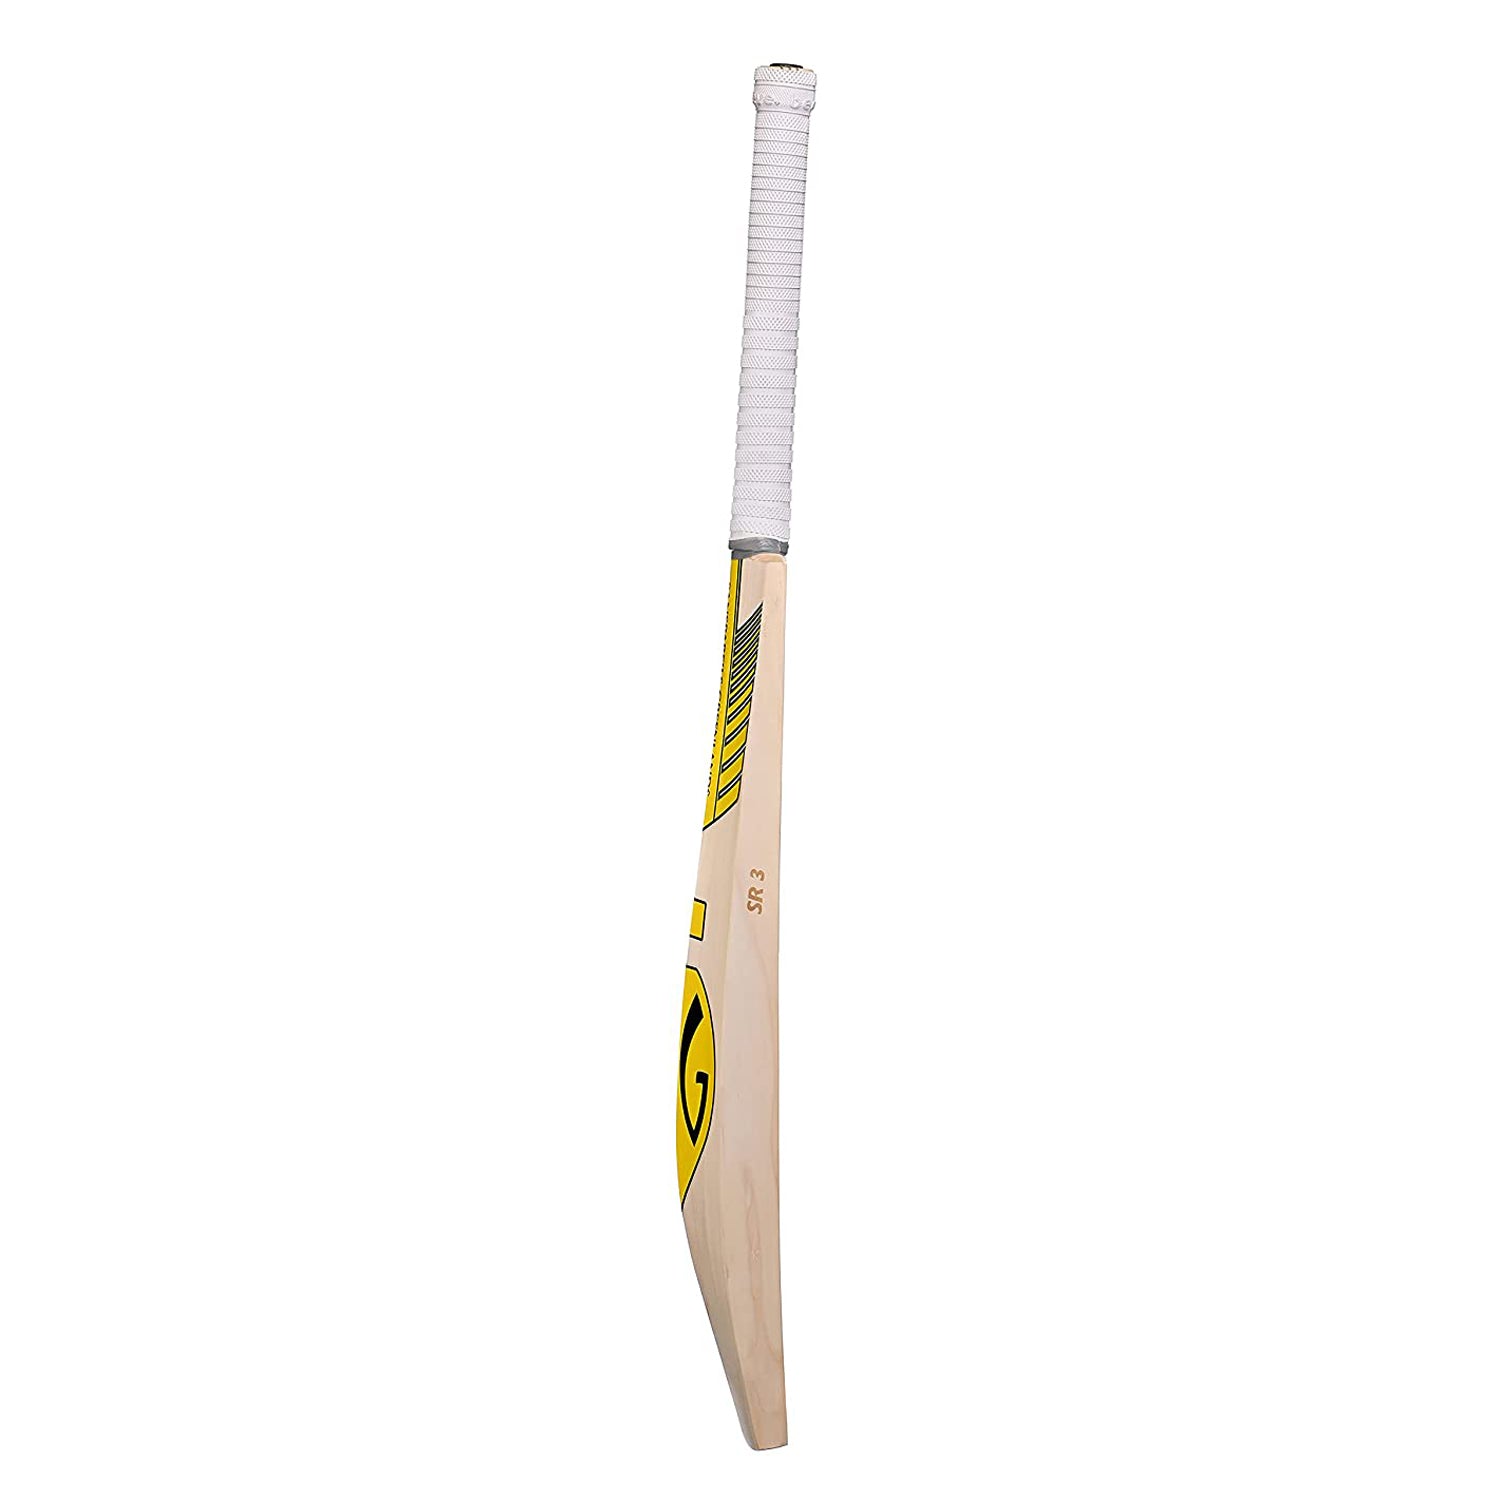 SG Sunny Tonny SR3 English Willow Cricket Bat - Best Price online Prokicksports.com